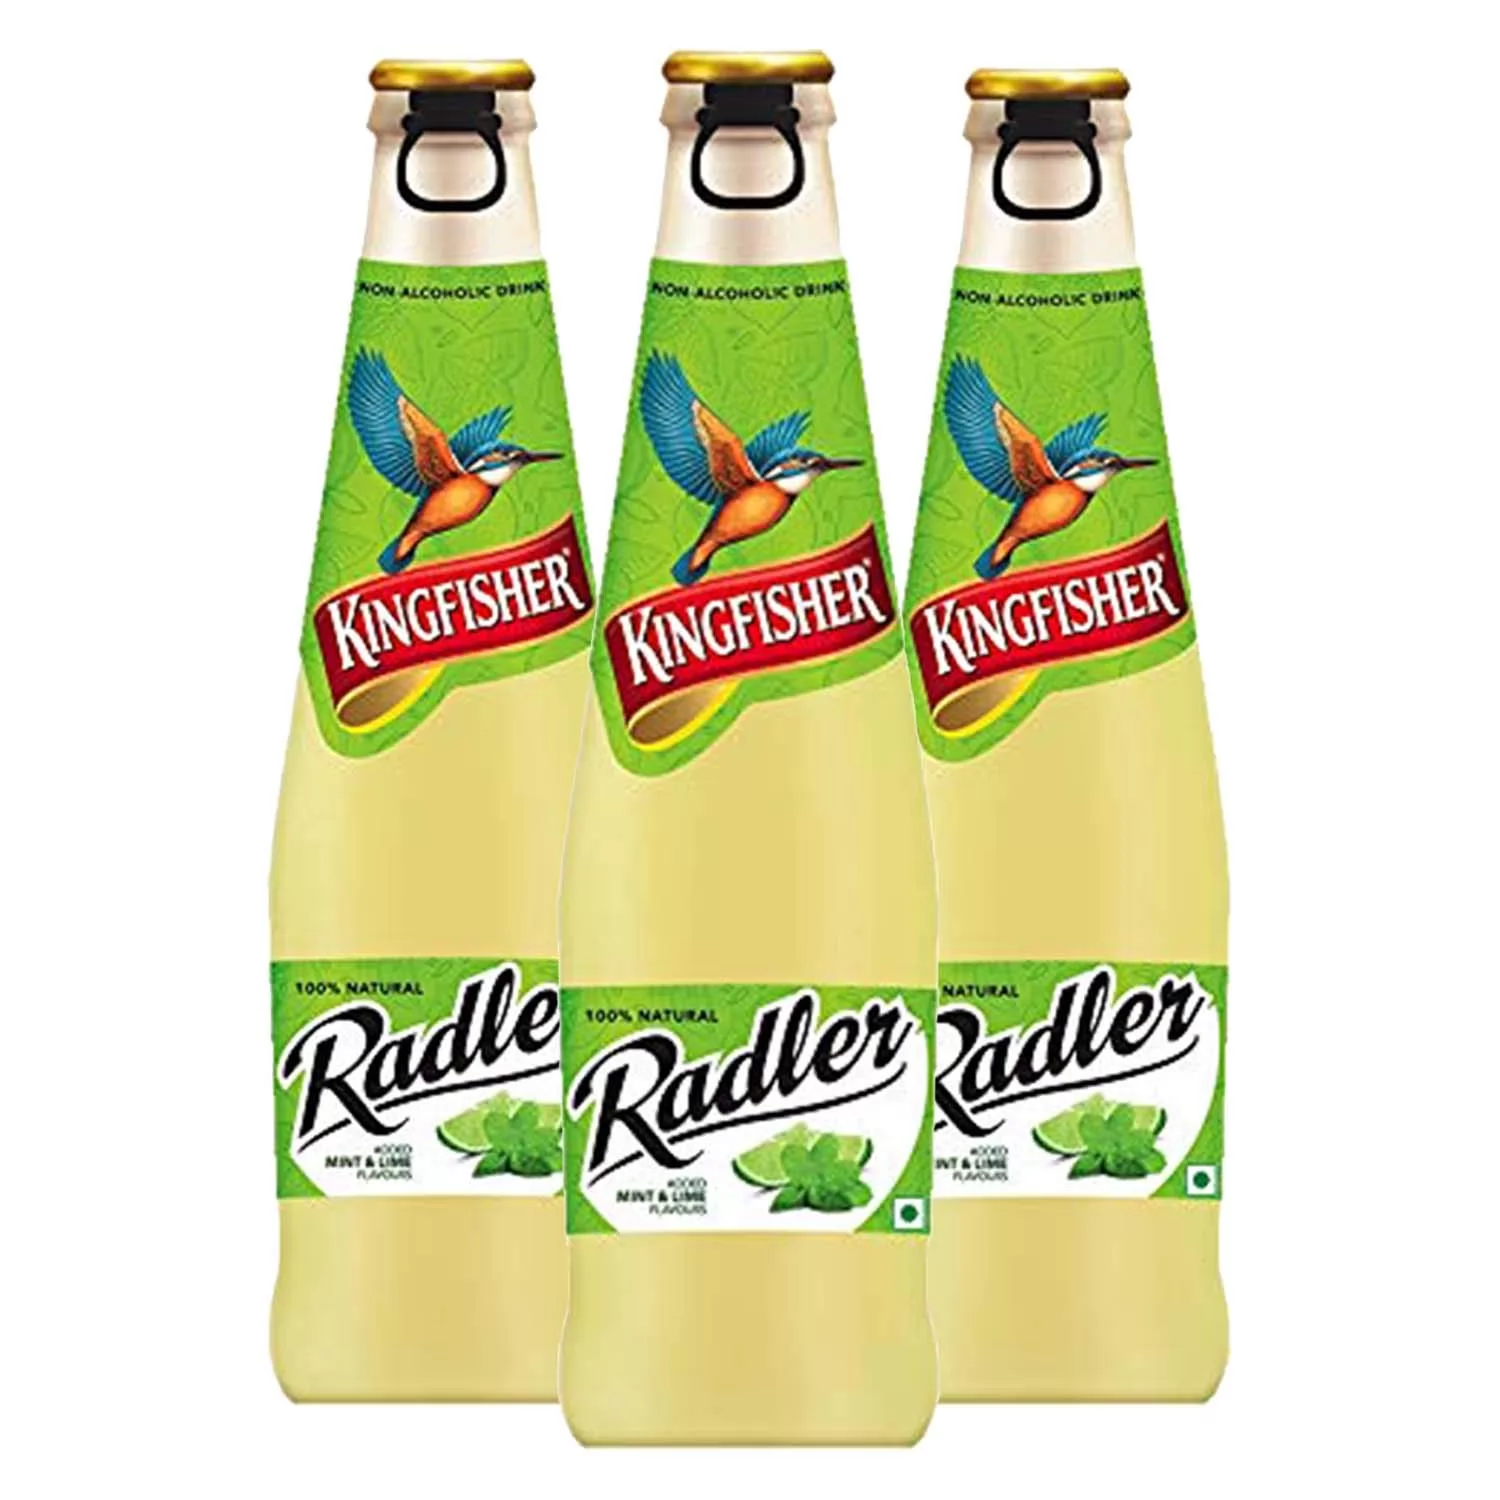  Kingfisher Radler - Non Alcoholic Malt Drink